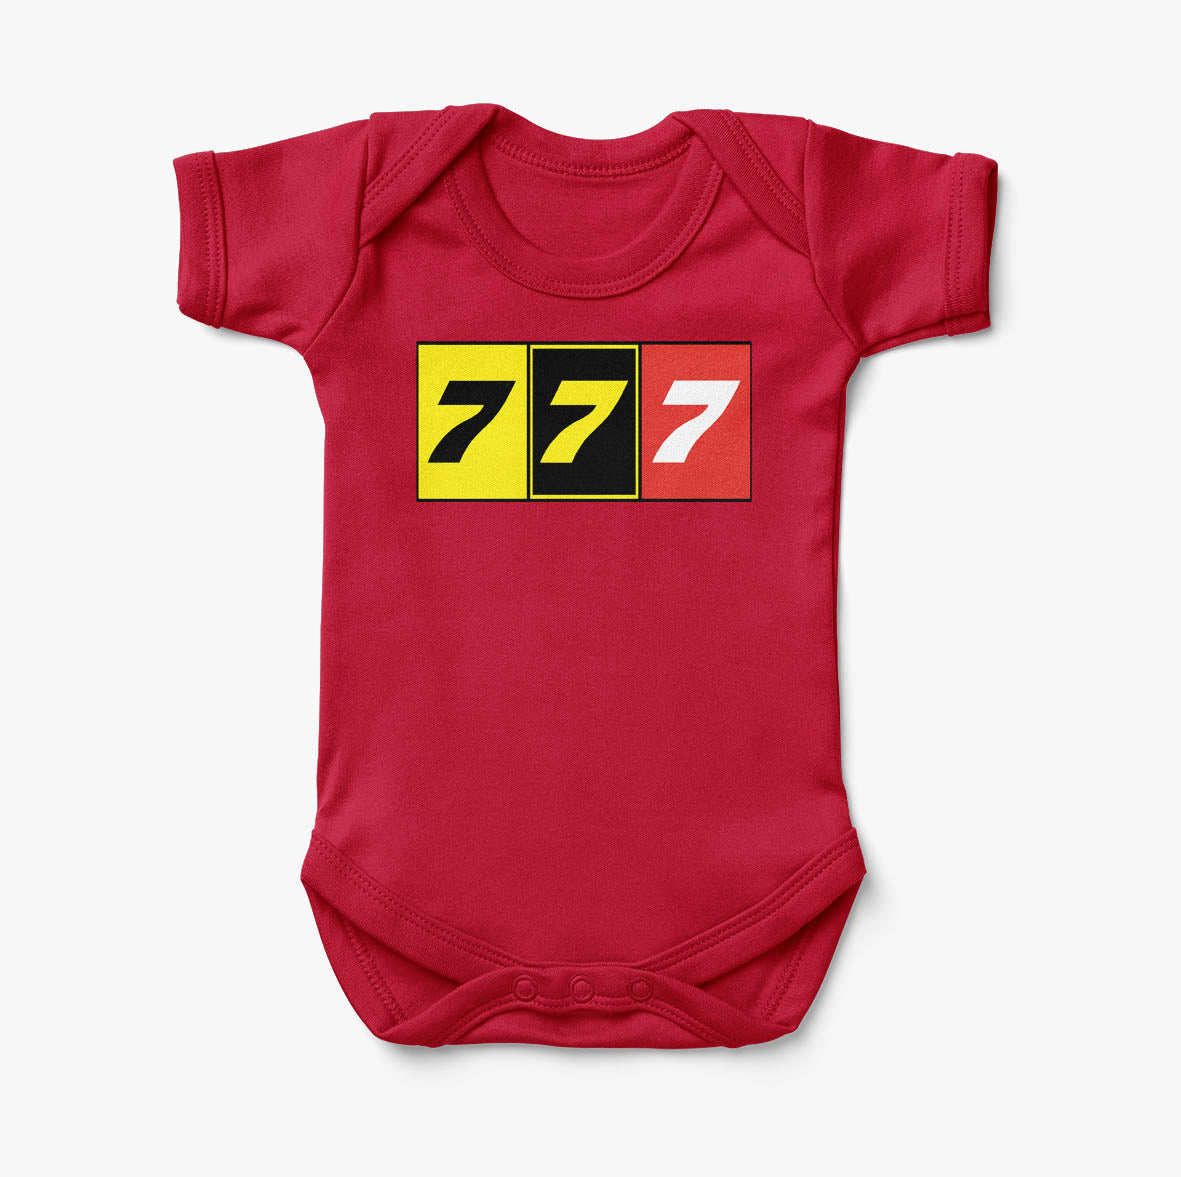 Flat Colourful 777 Designed Baby Bodysuits